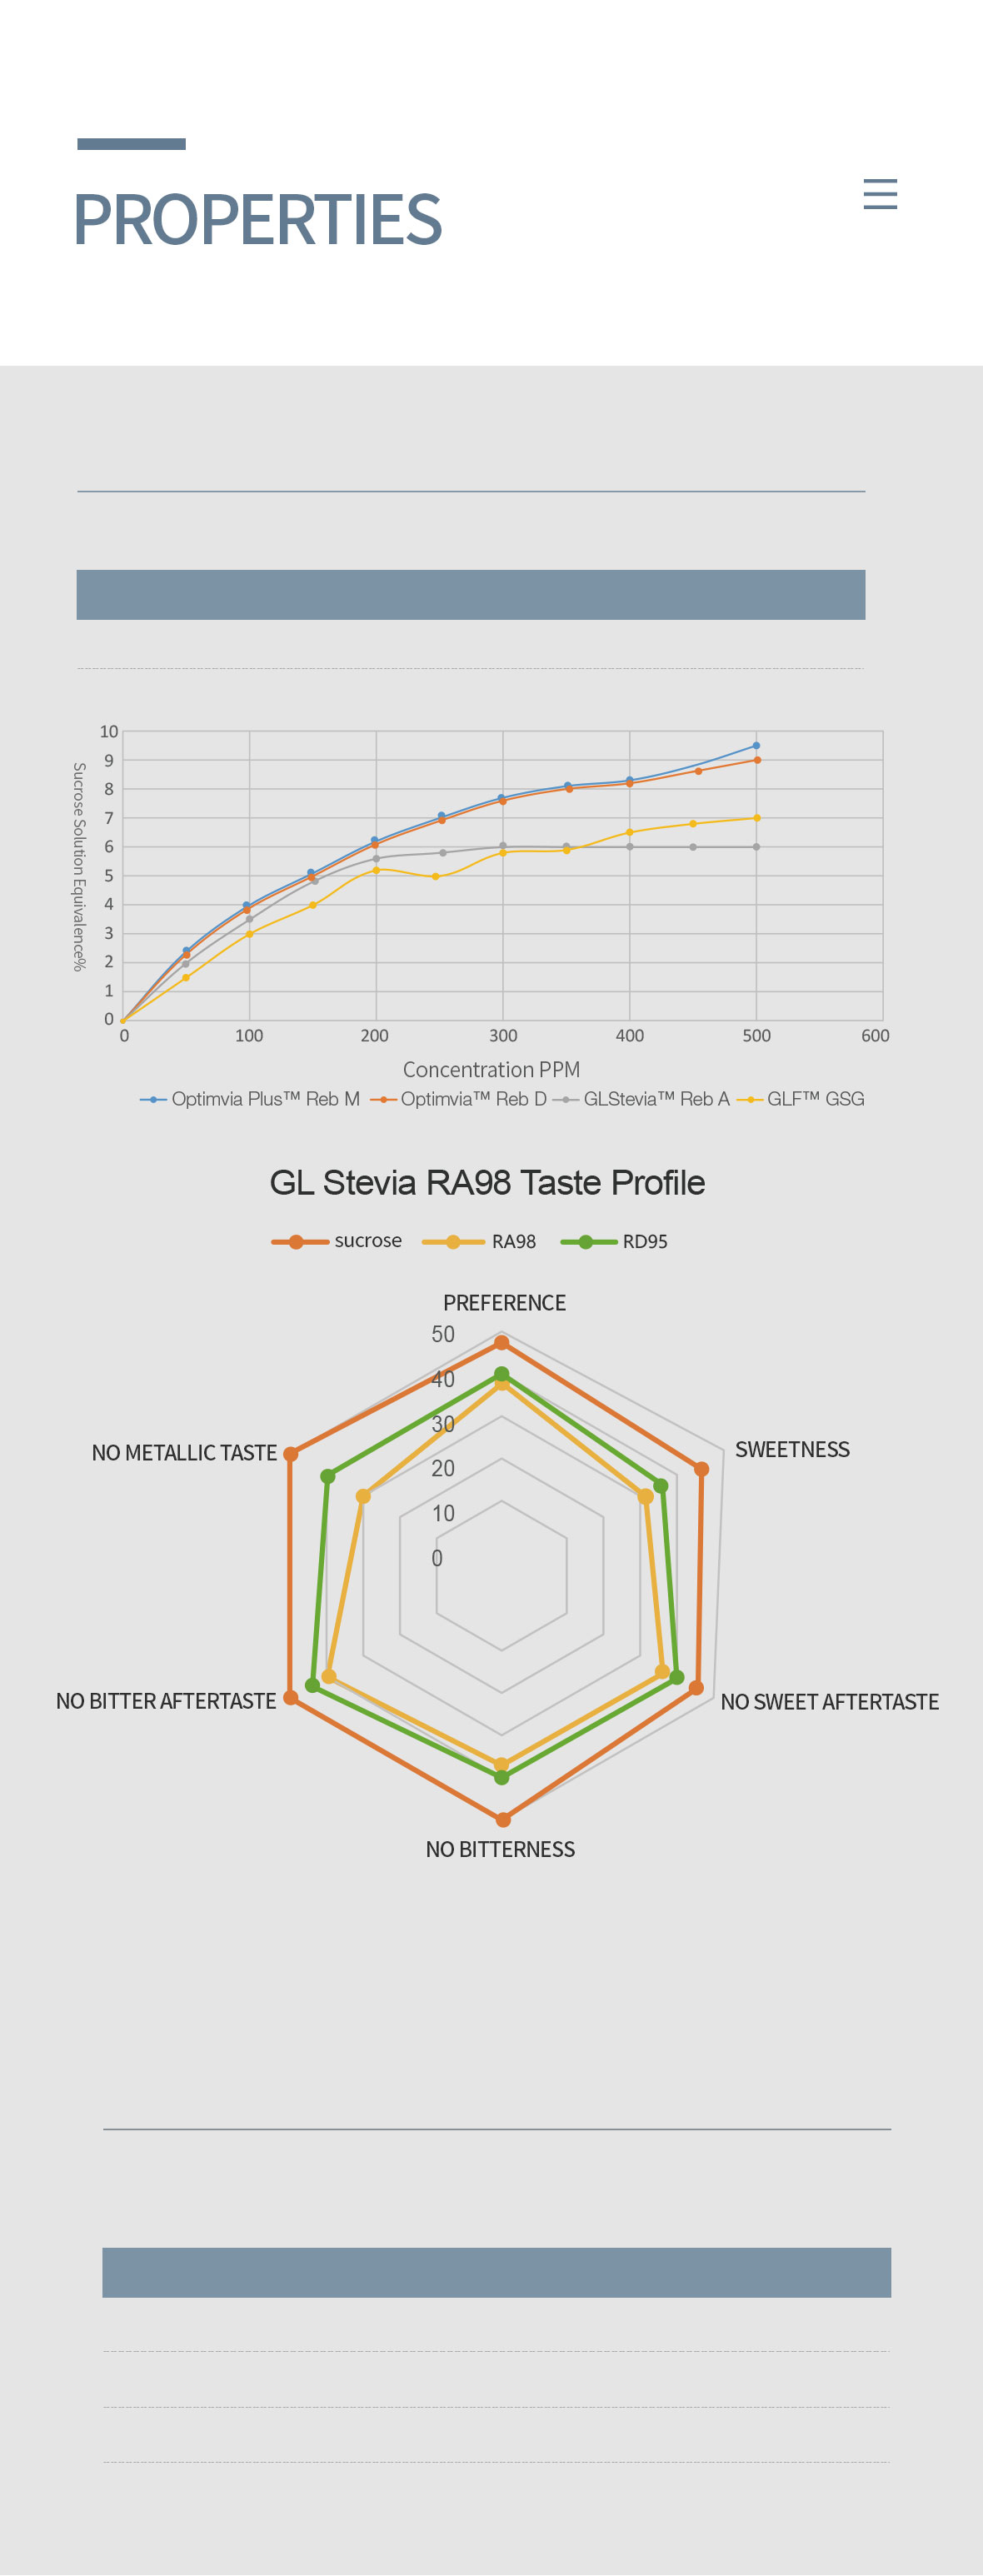 Stevia RA98 properties.png